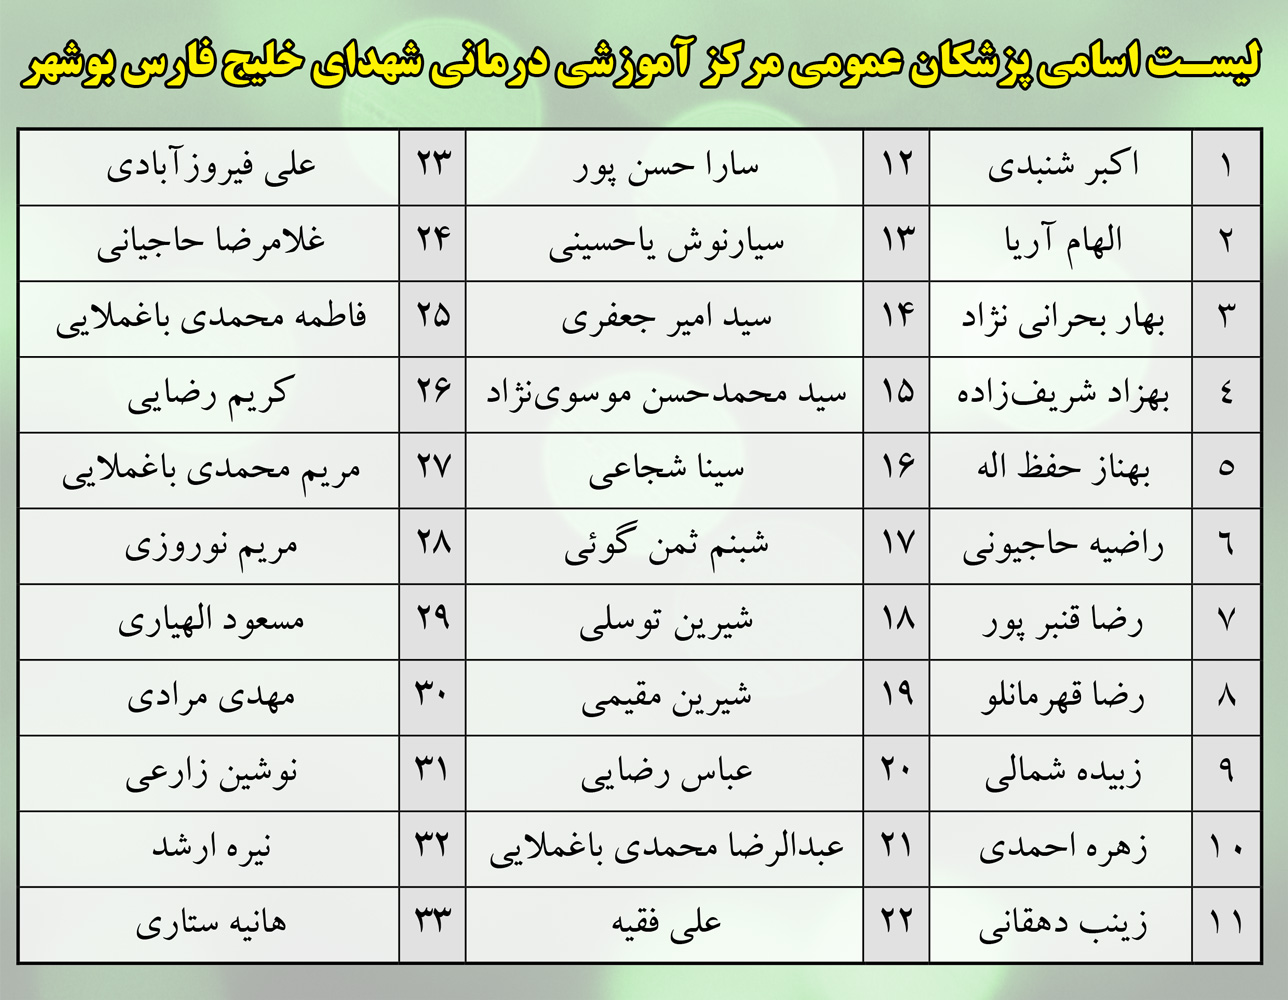 لیست پزشکان فوق تخصص استان بوشهر
